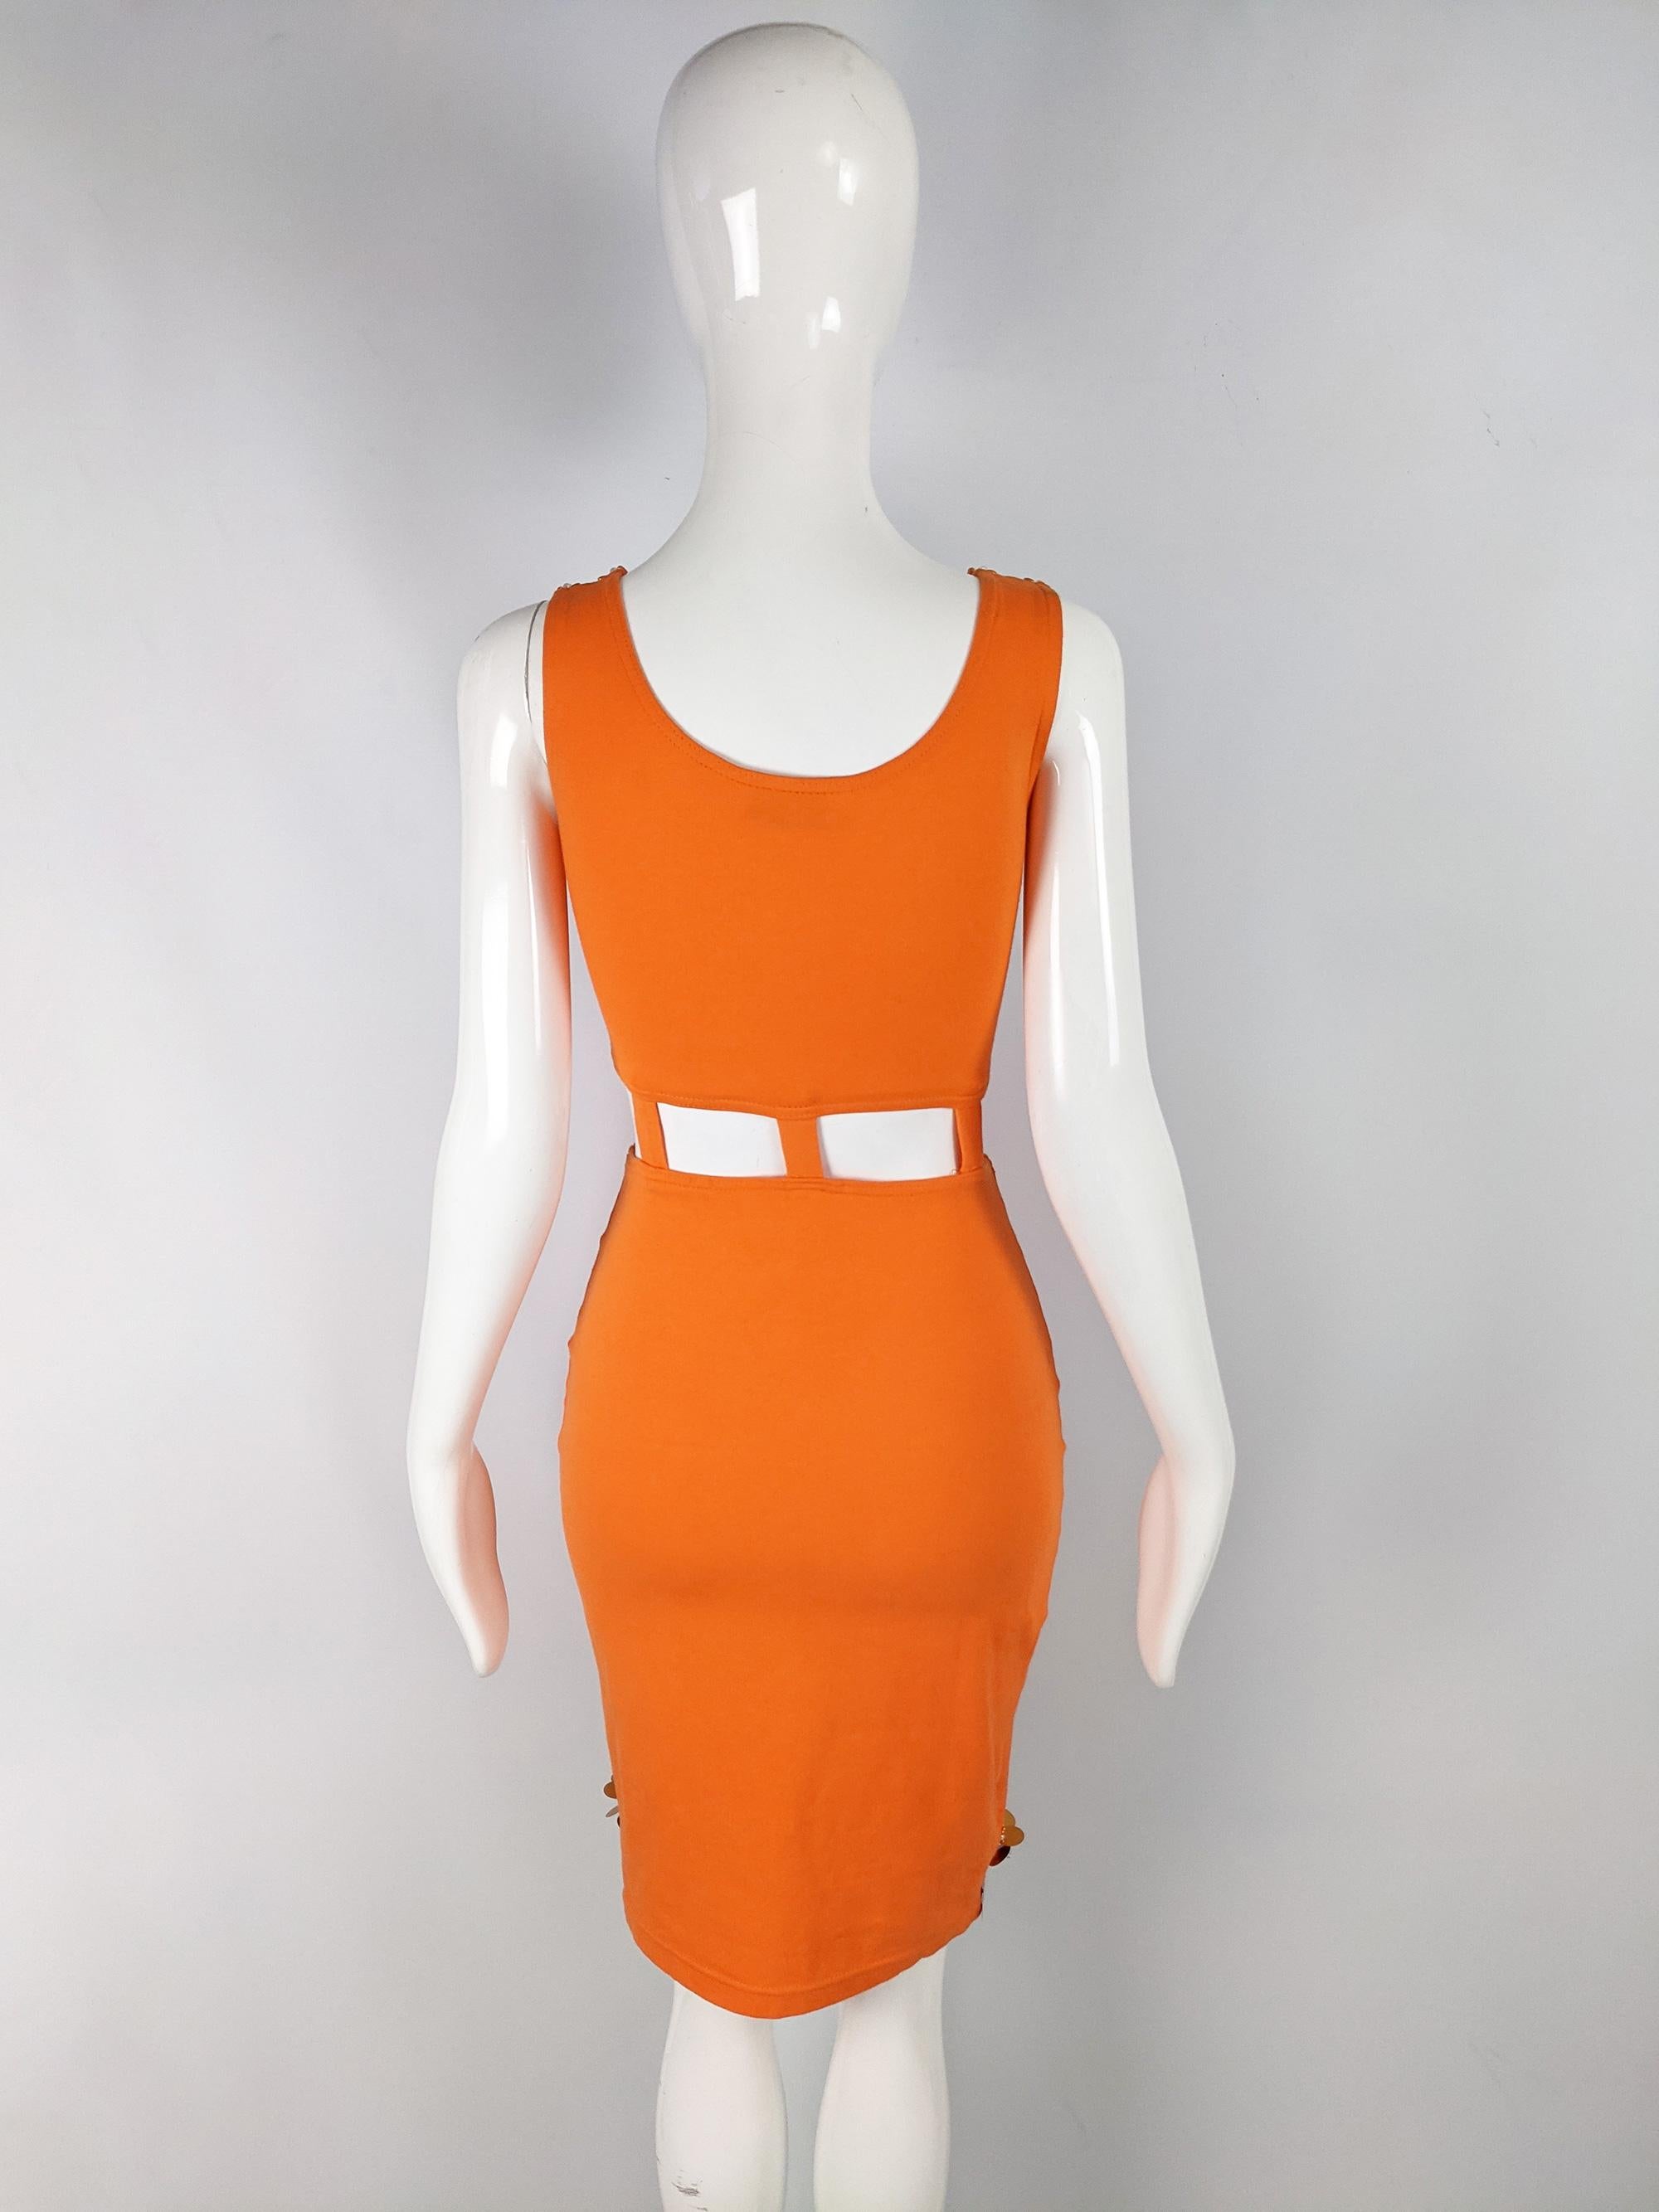 Women's Vintage 1980s Orange Bodycon Sexy Cut Out Sequin Party Dress